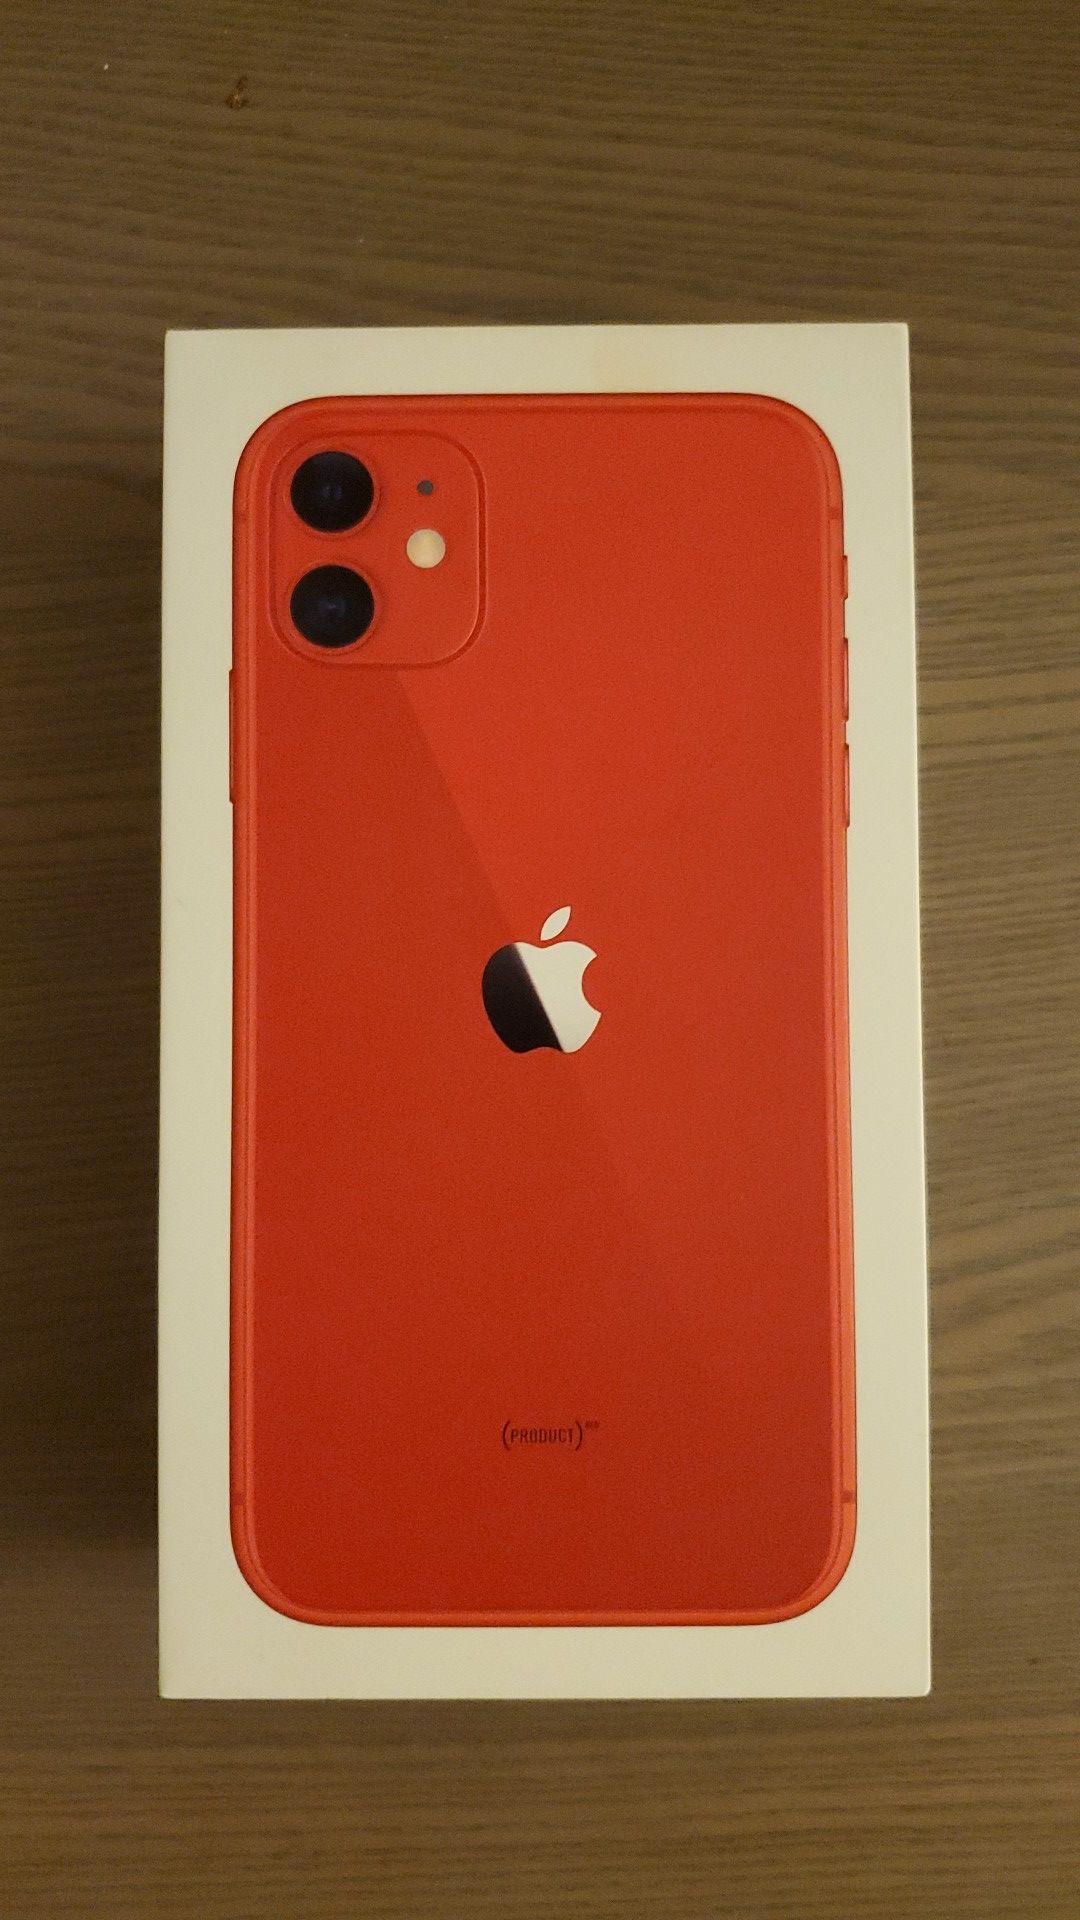 Tmobile iPhone 11 red 64gb new